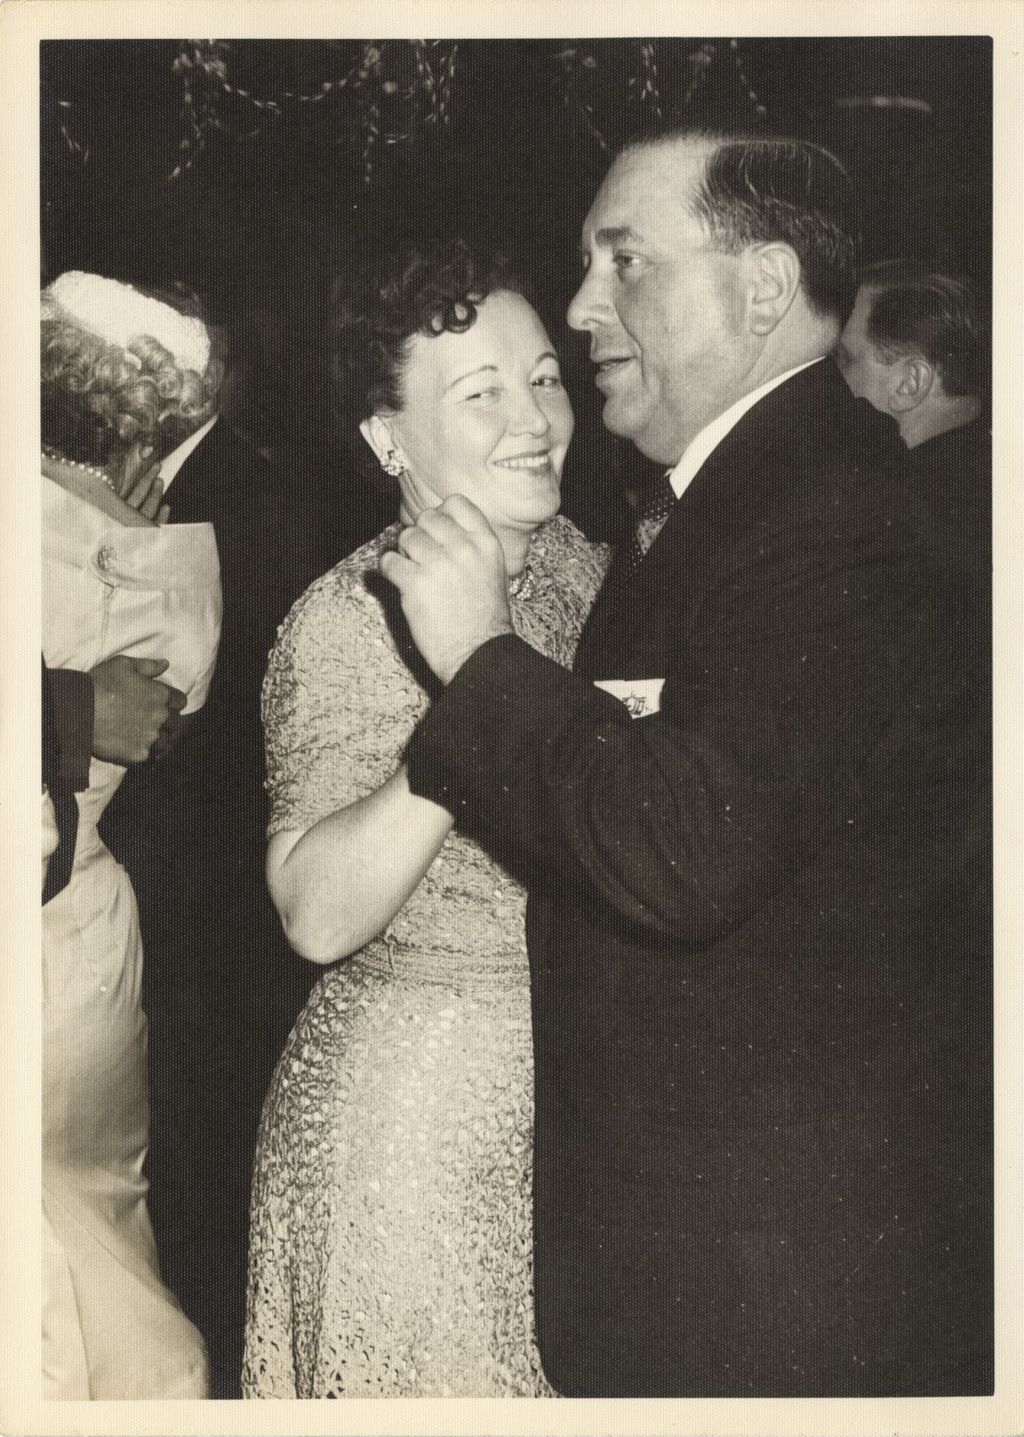 Miniature of Eleanor and Richard J. Daley dancing